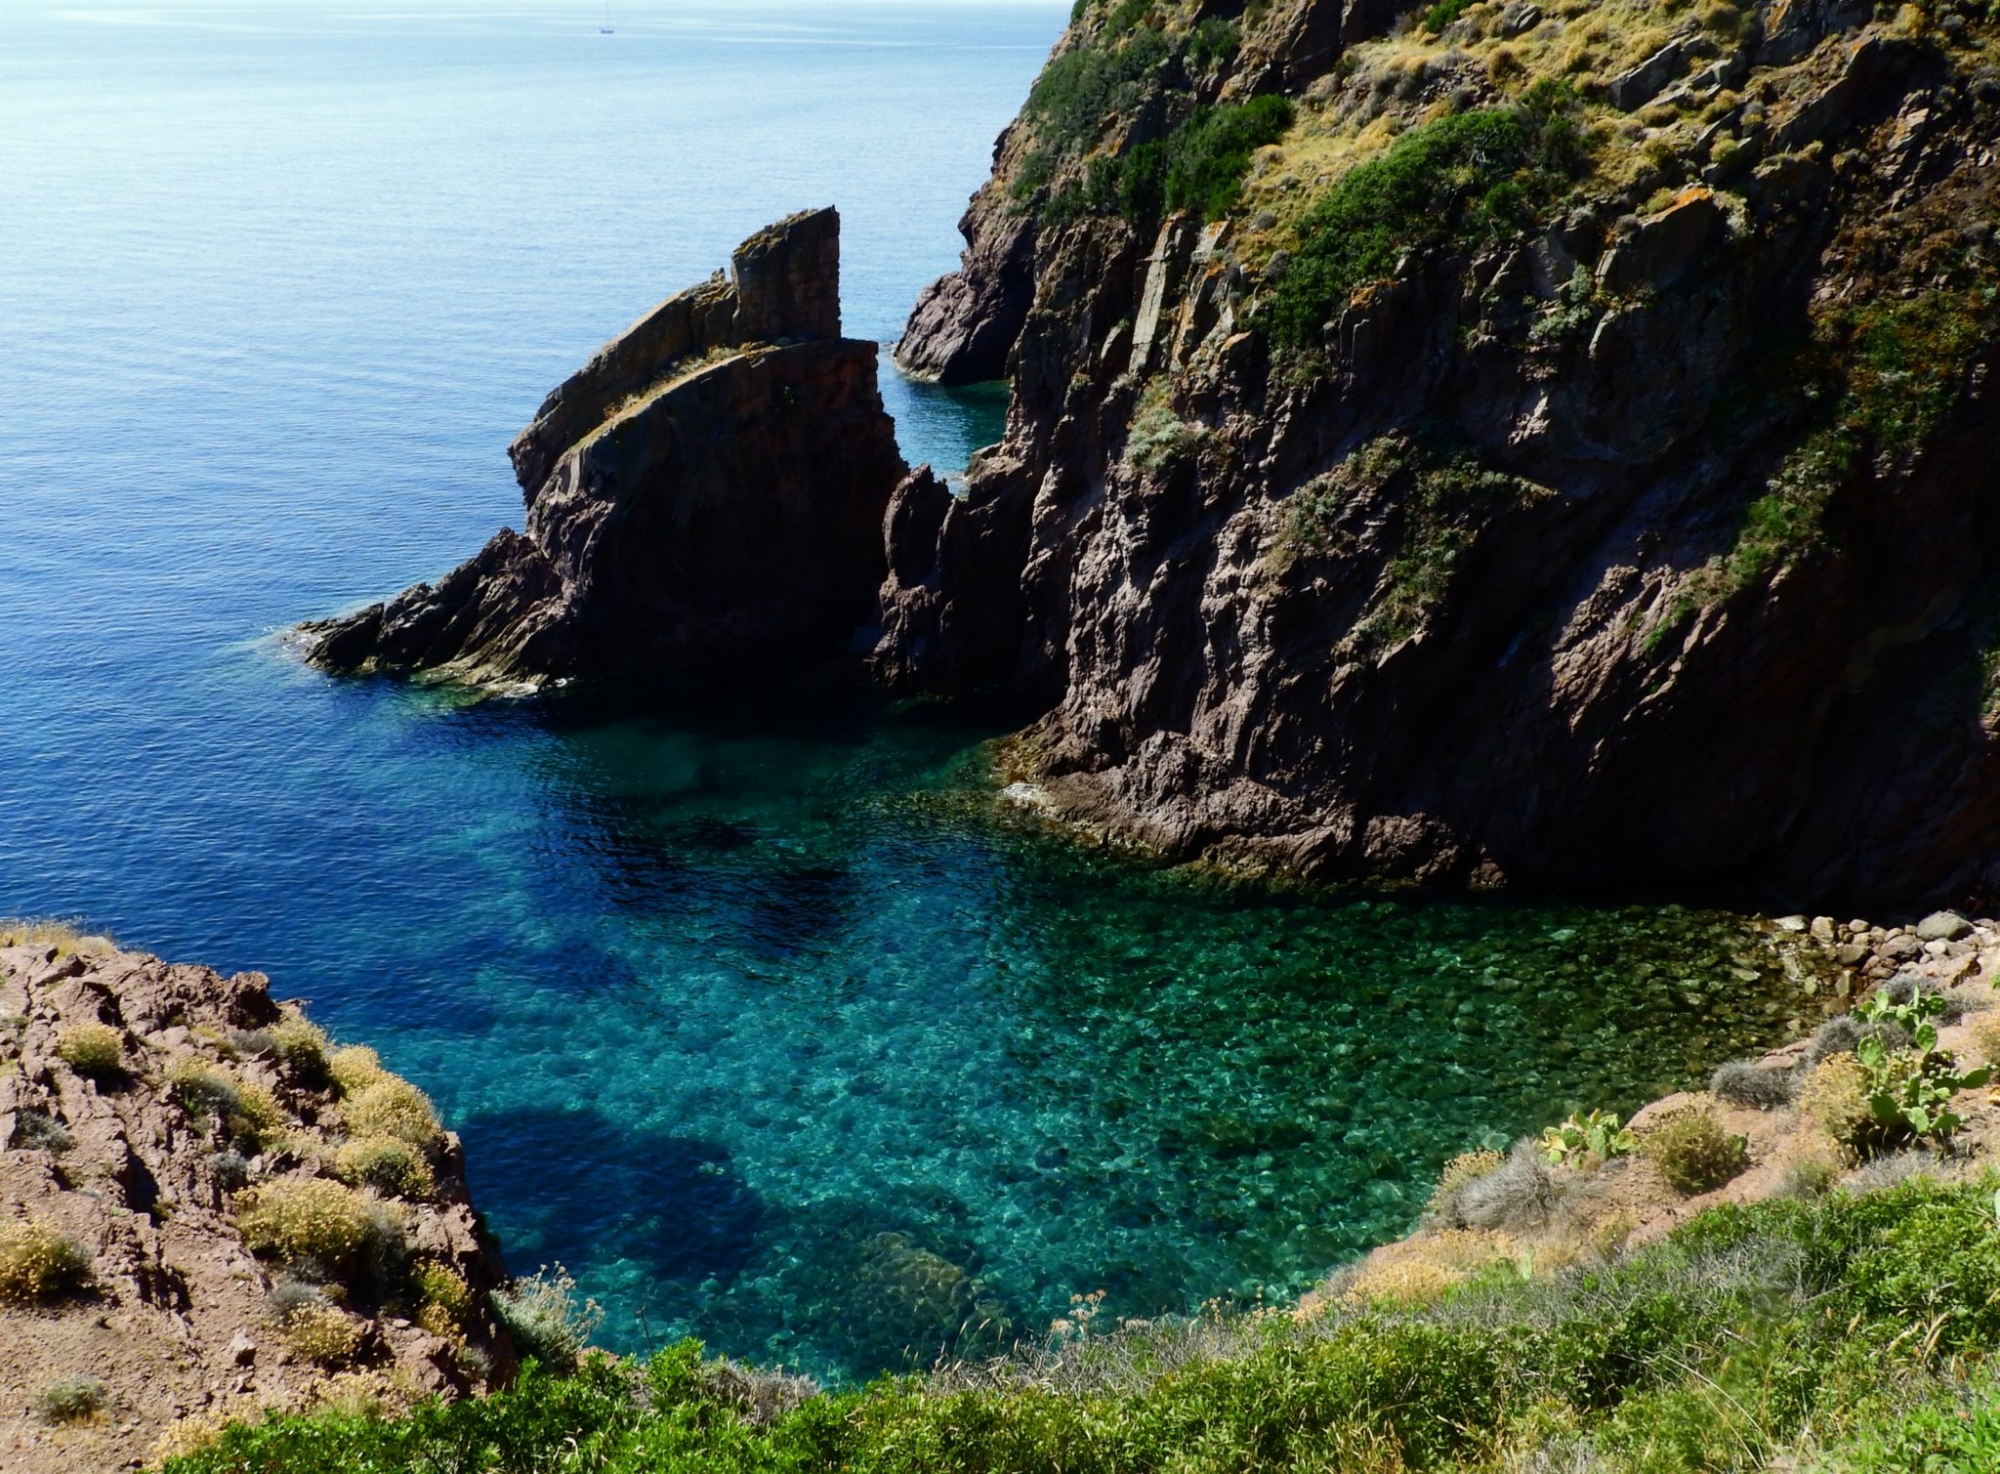 The crystal clear sea of Capraia Island